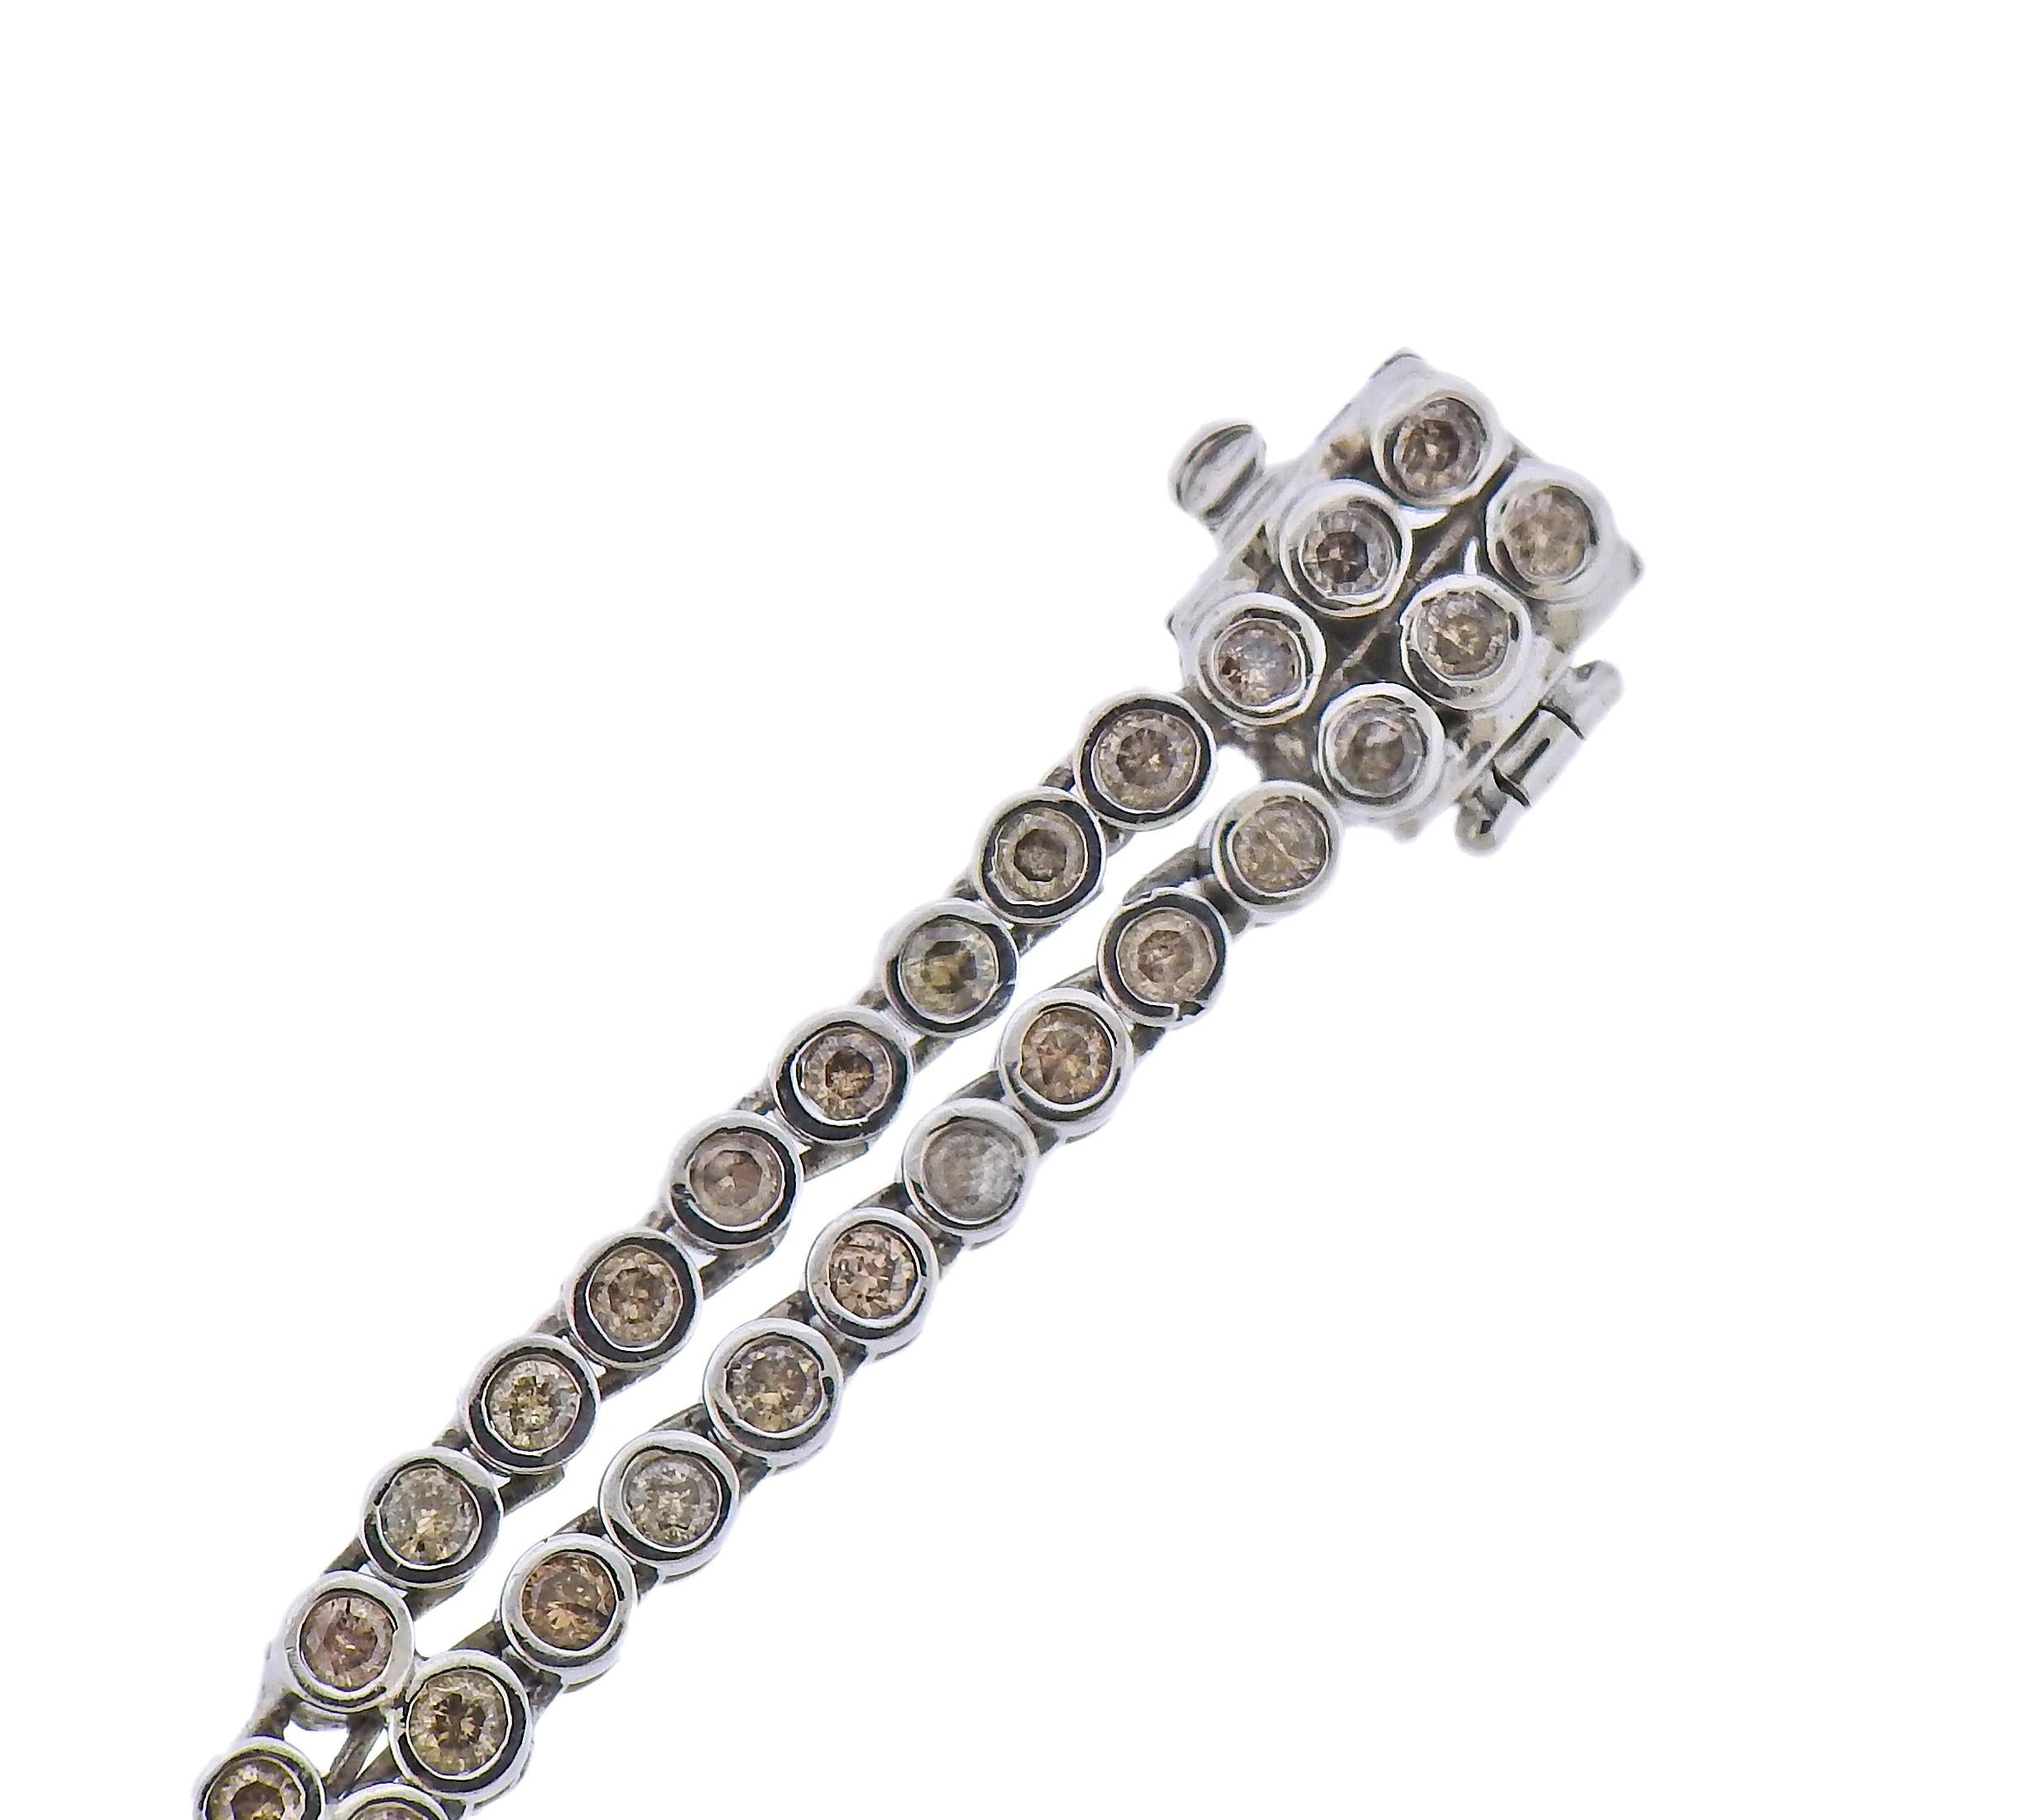 14k white gold double line bracelet with bezel set diamonds - approx. 3.00ctw in diamonds total. Bracelet is 7.25